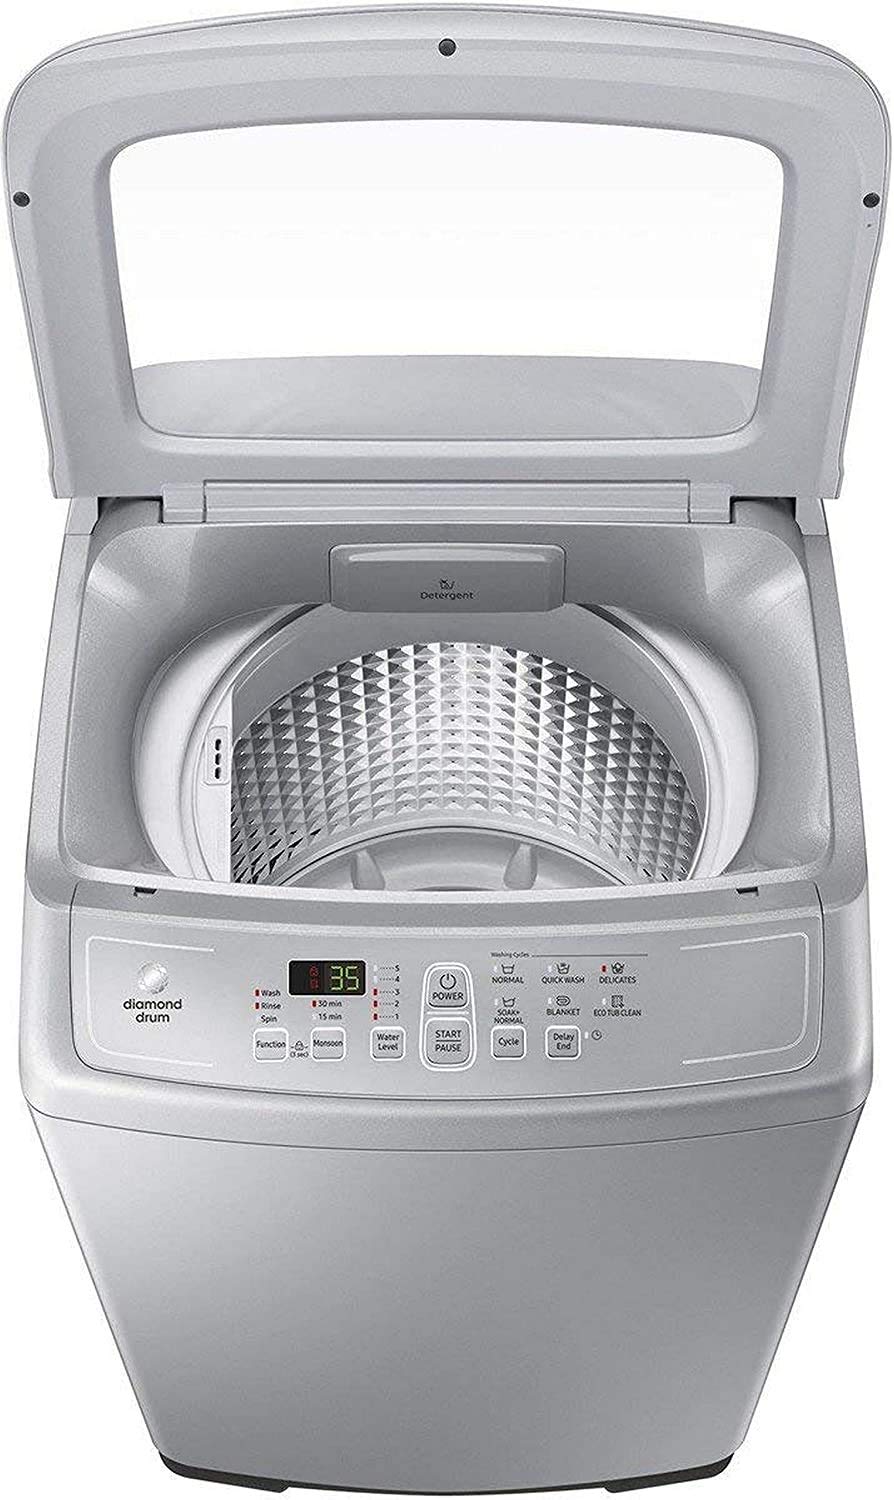 samsung washing machine 6kg price